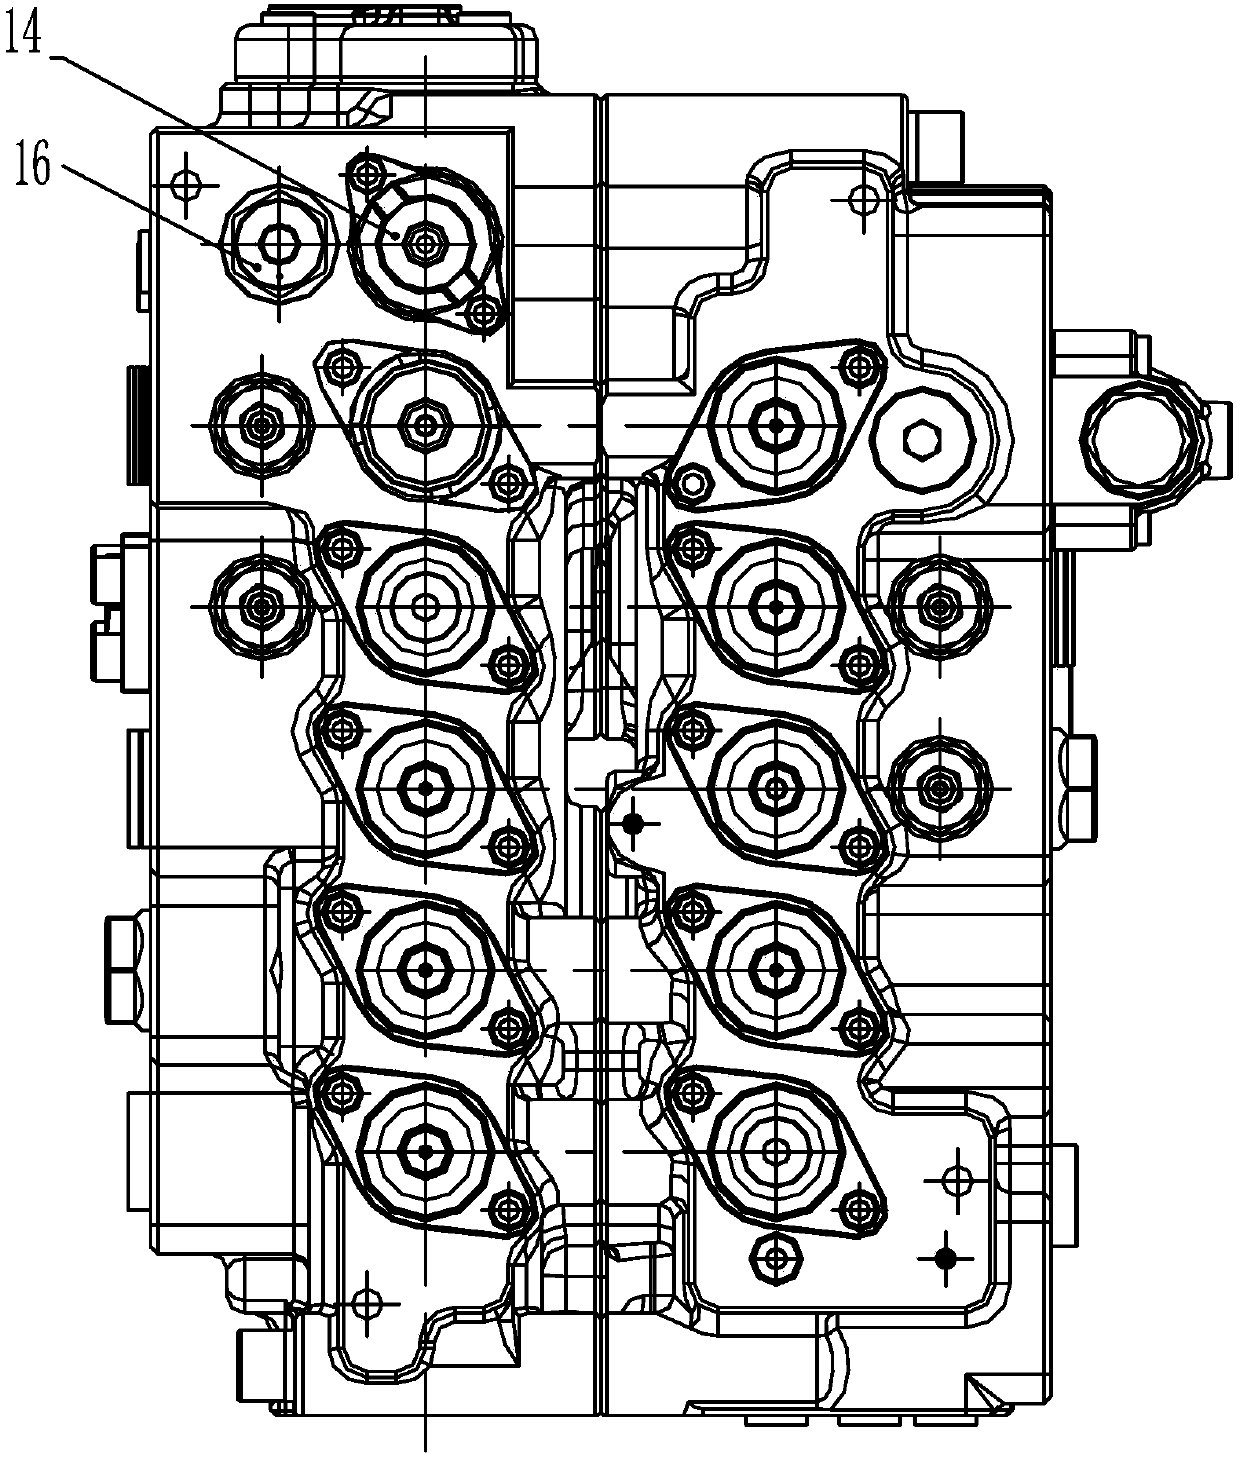 Multi-way control valve for hydraulic excavator